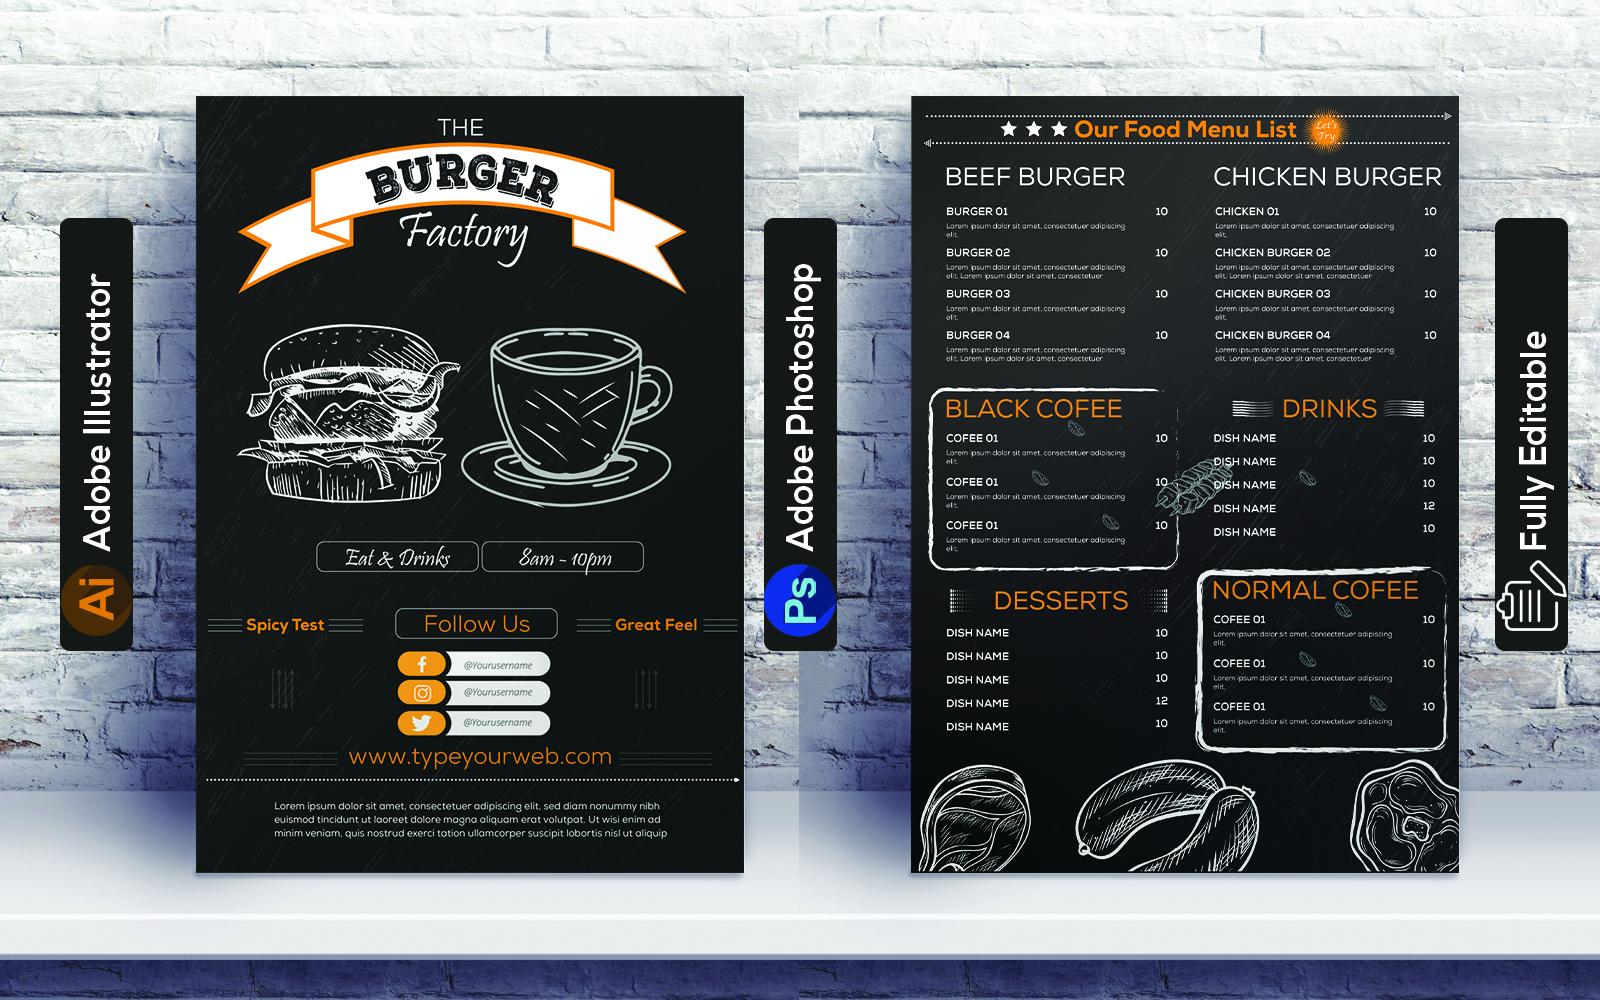 Restaurant Burger Menu design - Corporate Identity Template